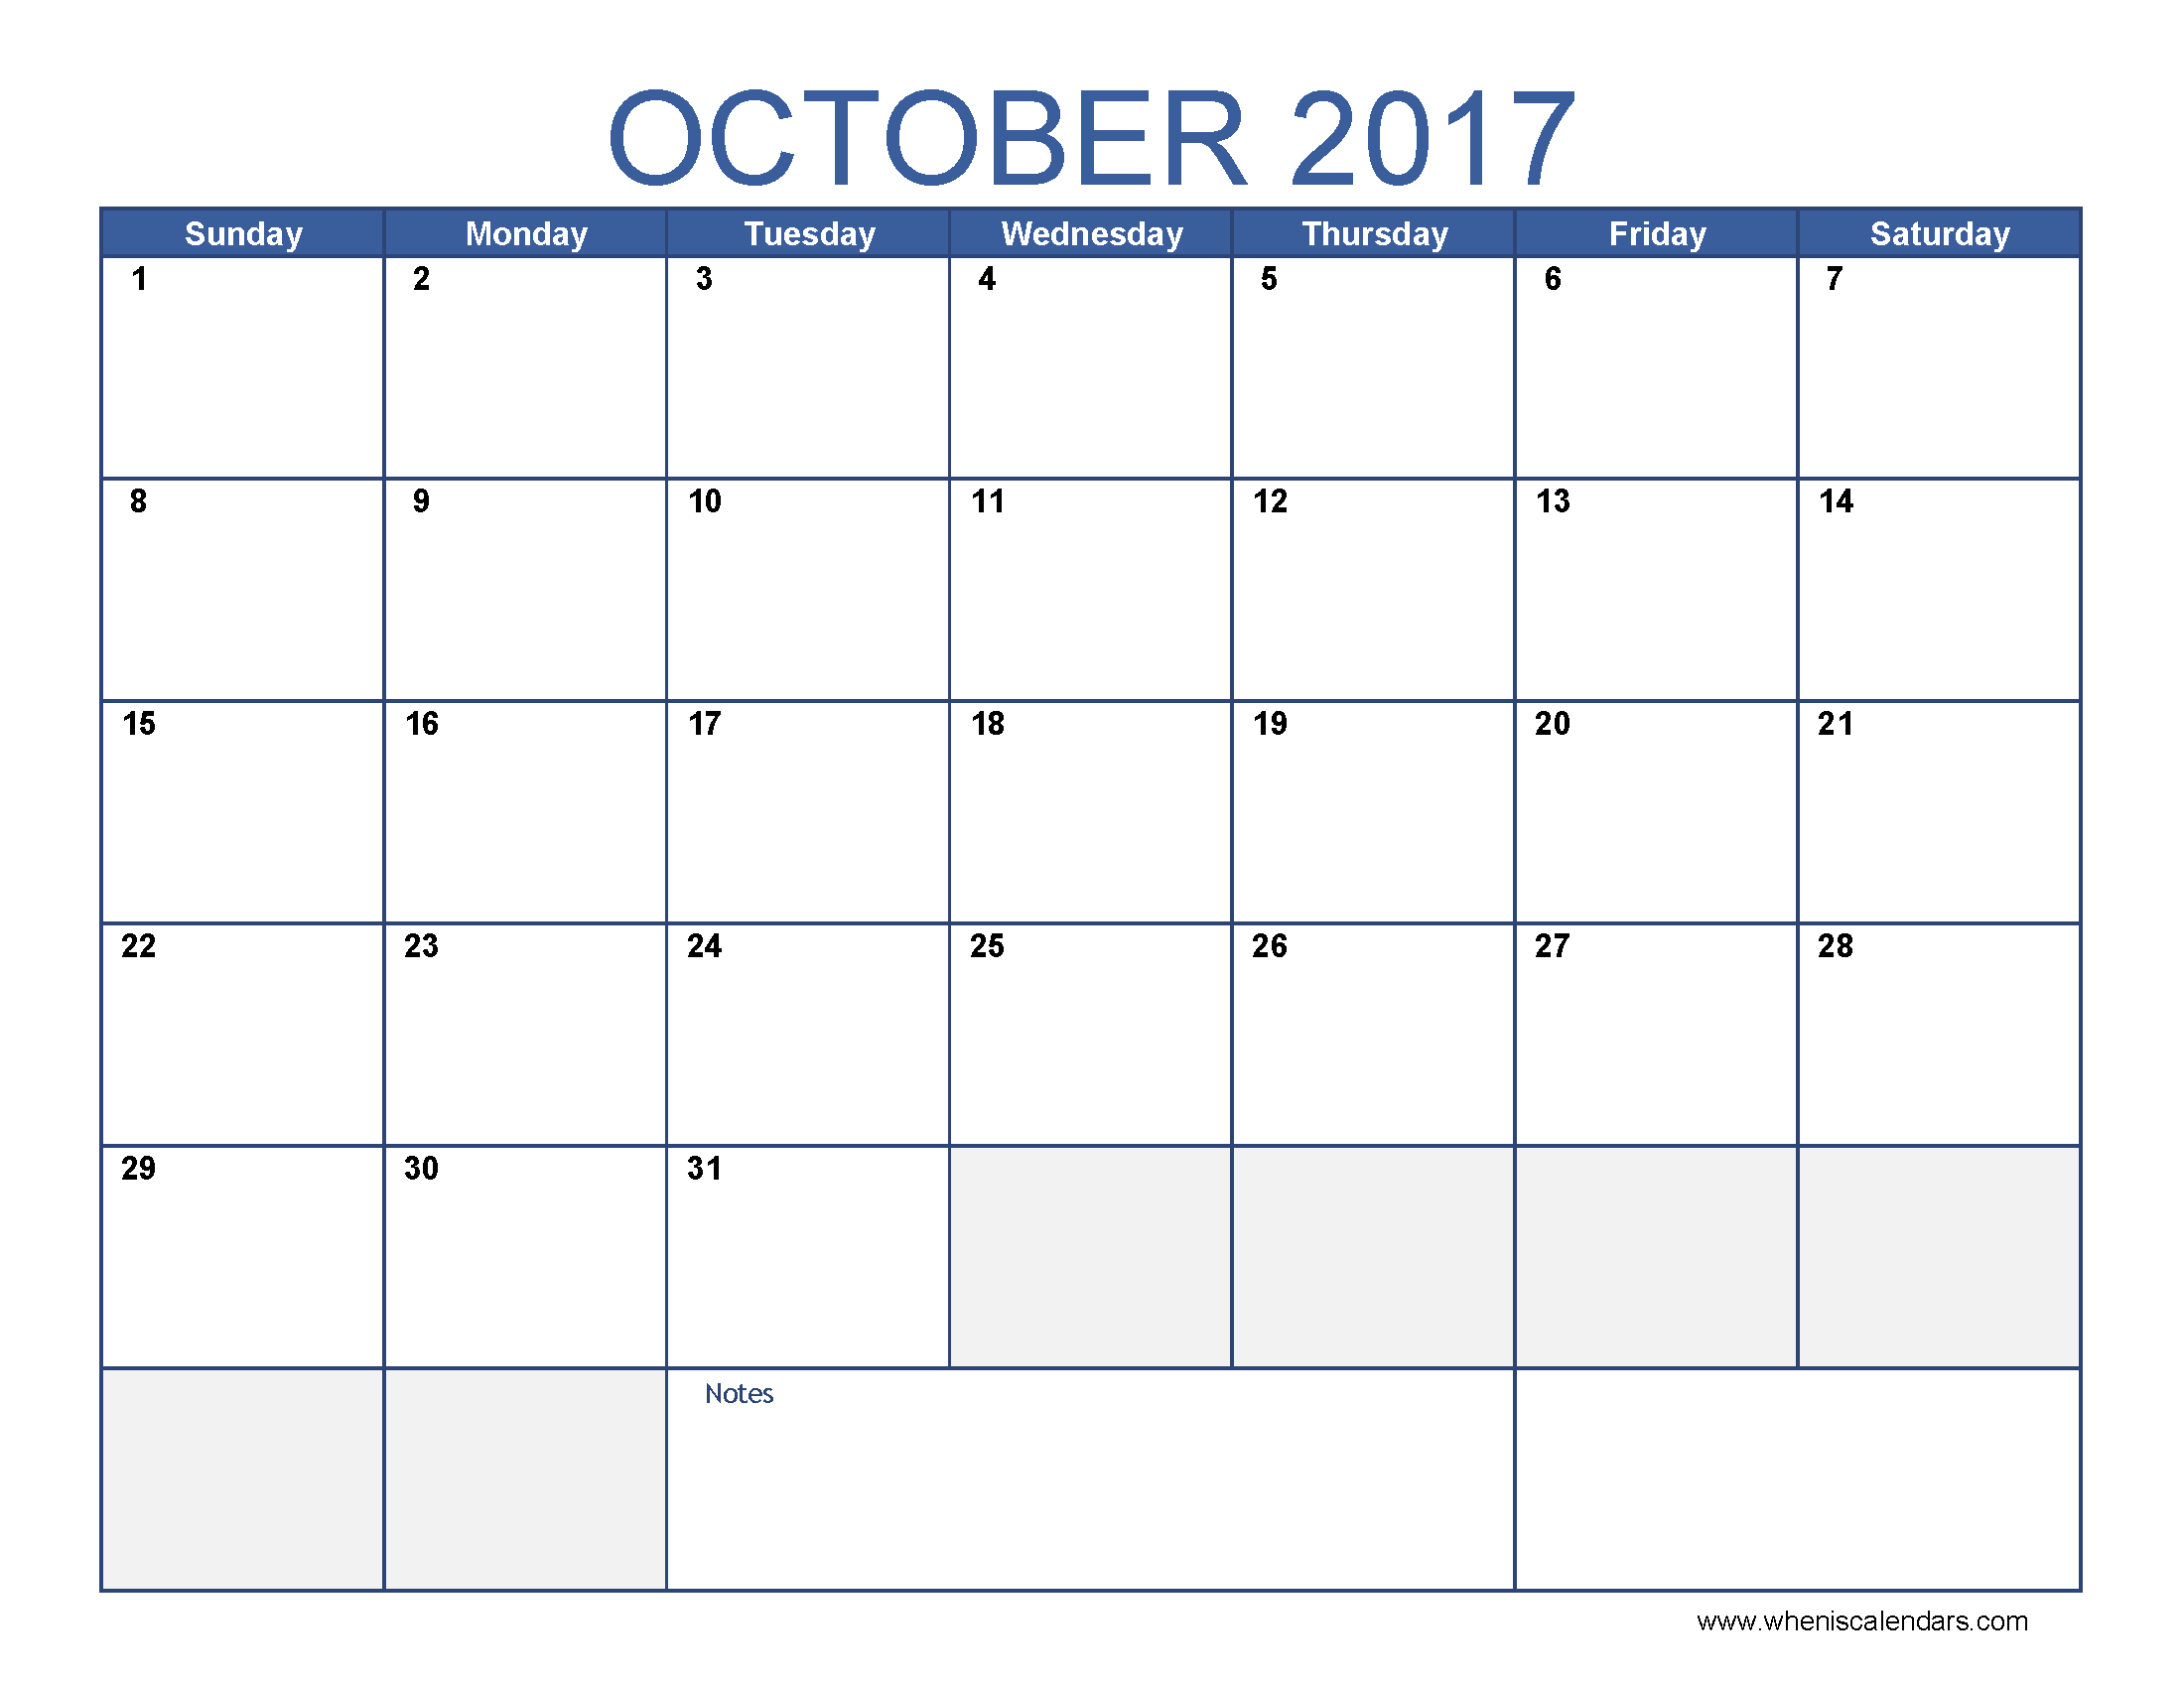 October 2017 Calendar Template | free calendar 2017